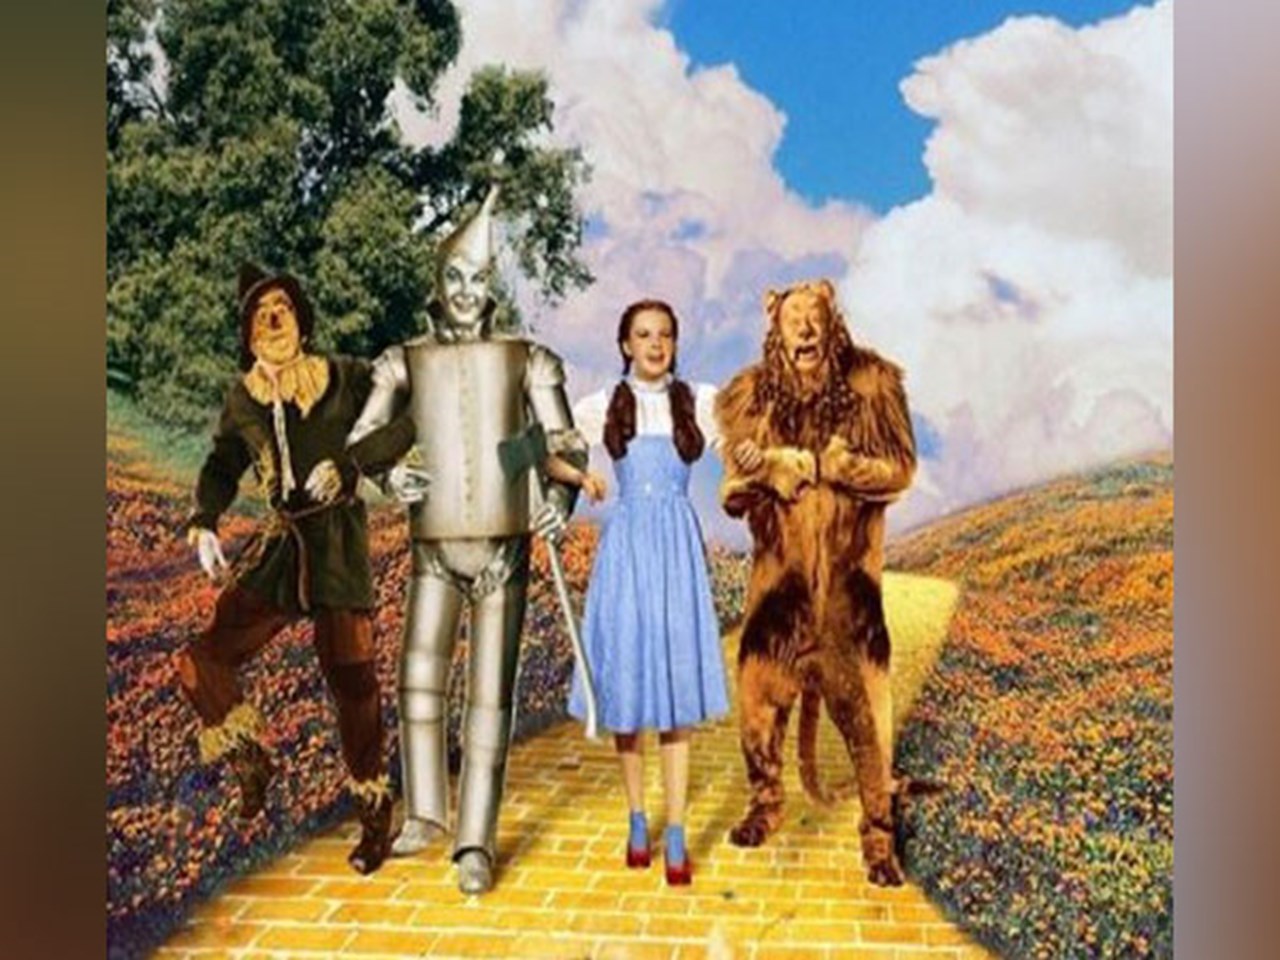 Frontlist | Warner Bros' New Line Set To Adapt 'Wizard Of Oz' Novel Into Movie